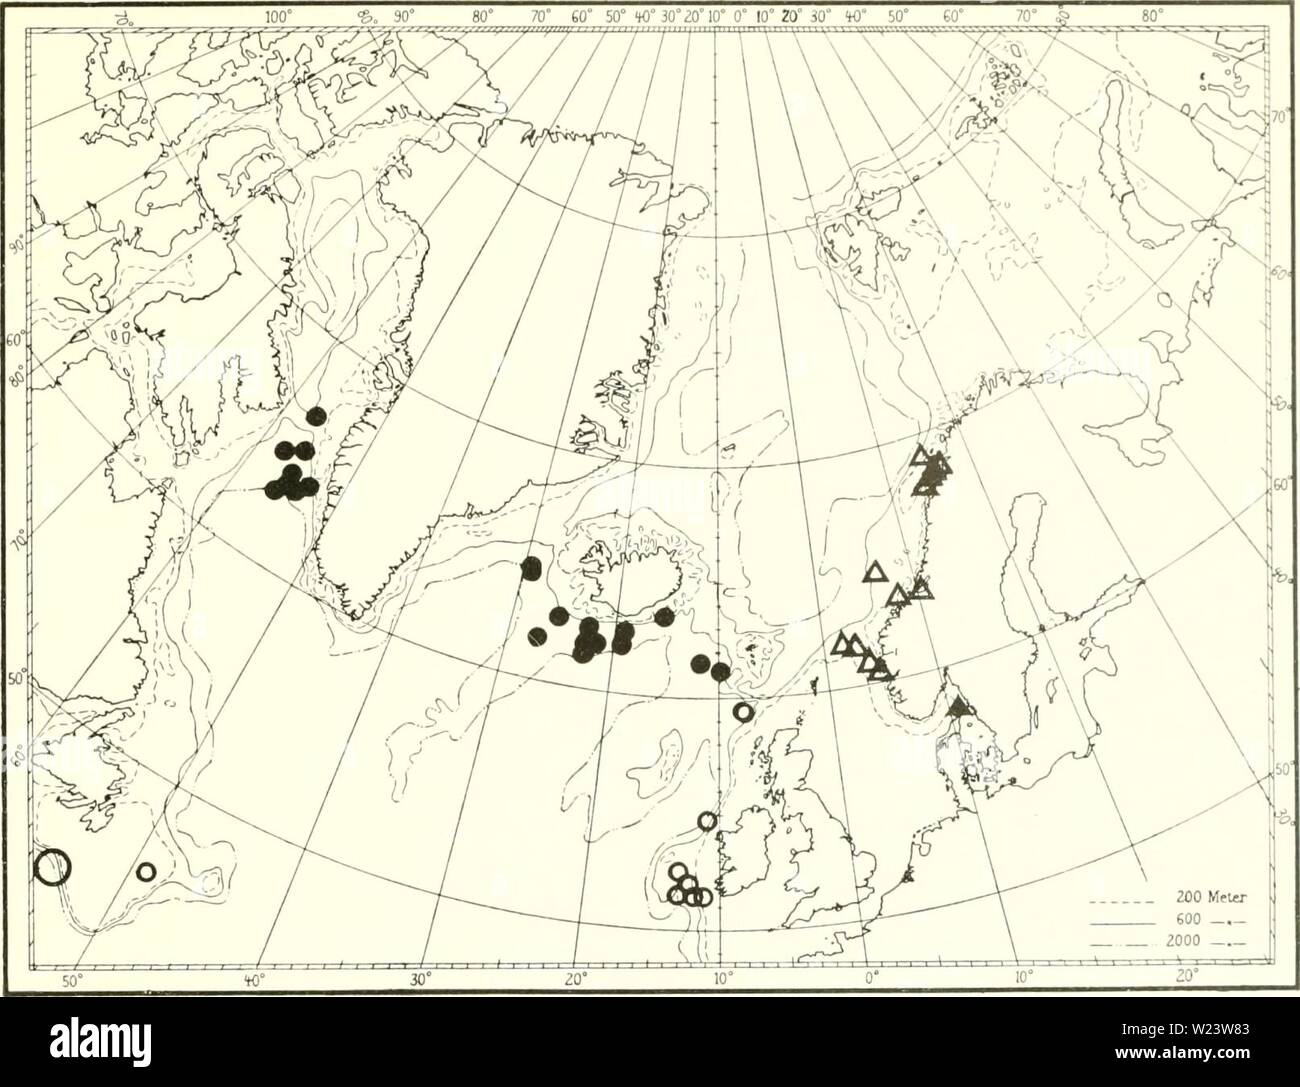 Archive image from page 184 of The Danish Ingolf-expedition (1899-1953). The Danish Ingolf-expedition  danishingolfex5dpt12daniuoft Year: 1899-1953  Ot'TOC'ORALLIA    Fig. 53. â¢ Actnu'Ua (irhusciihi (.lolinsnn). A Isidi'lhi ]()jok&gt;ixU M. Sais. 02Â°4O' N. 22Â°17' W. 1109)11, 3 9('. 'Innolf St. (i9. erw N. 27'00' W. 913m, 6Â°1 C. â - Si. 62Â°58' N. 25Â°24' W. 1192 m, 4Â°8C. â - S4. 64Â°45' N. 29Â°0()' W. 1070 m, 4Â°4C. â - 90. 6r08' N. 9Â°4B' W. 847 m, -'Mirhapl Sars' St. 79. 64Â°05' N. 55Â°20' W. 1100 m, '-Tialfi'' St. 337. 64Â°40' N. 56Â°37' W. 750 m, â - 402. 63Â°54' N. 53Â°15' W. 98,S m, Stock Photo